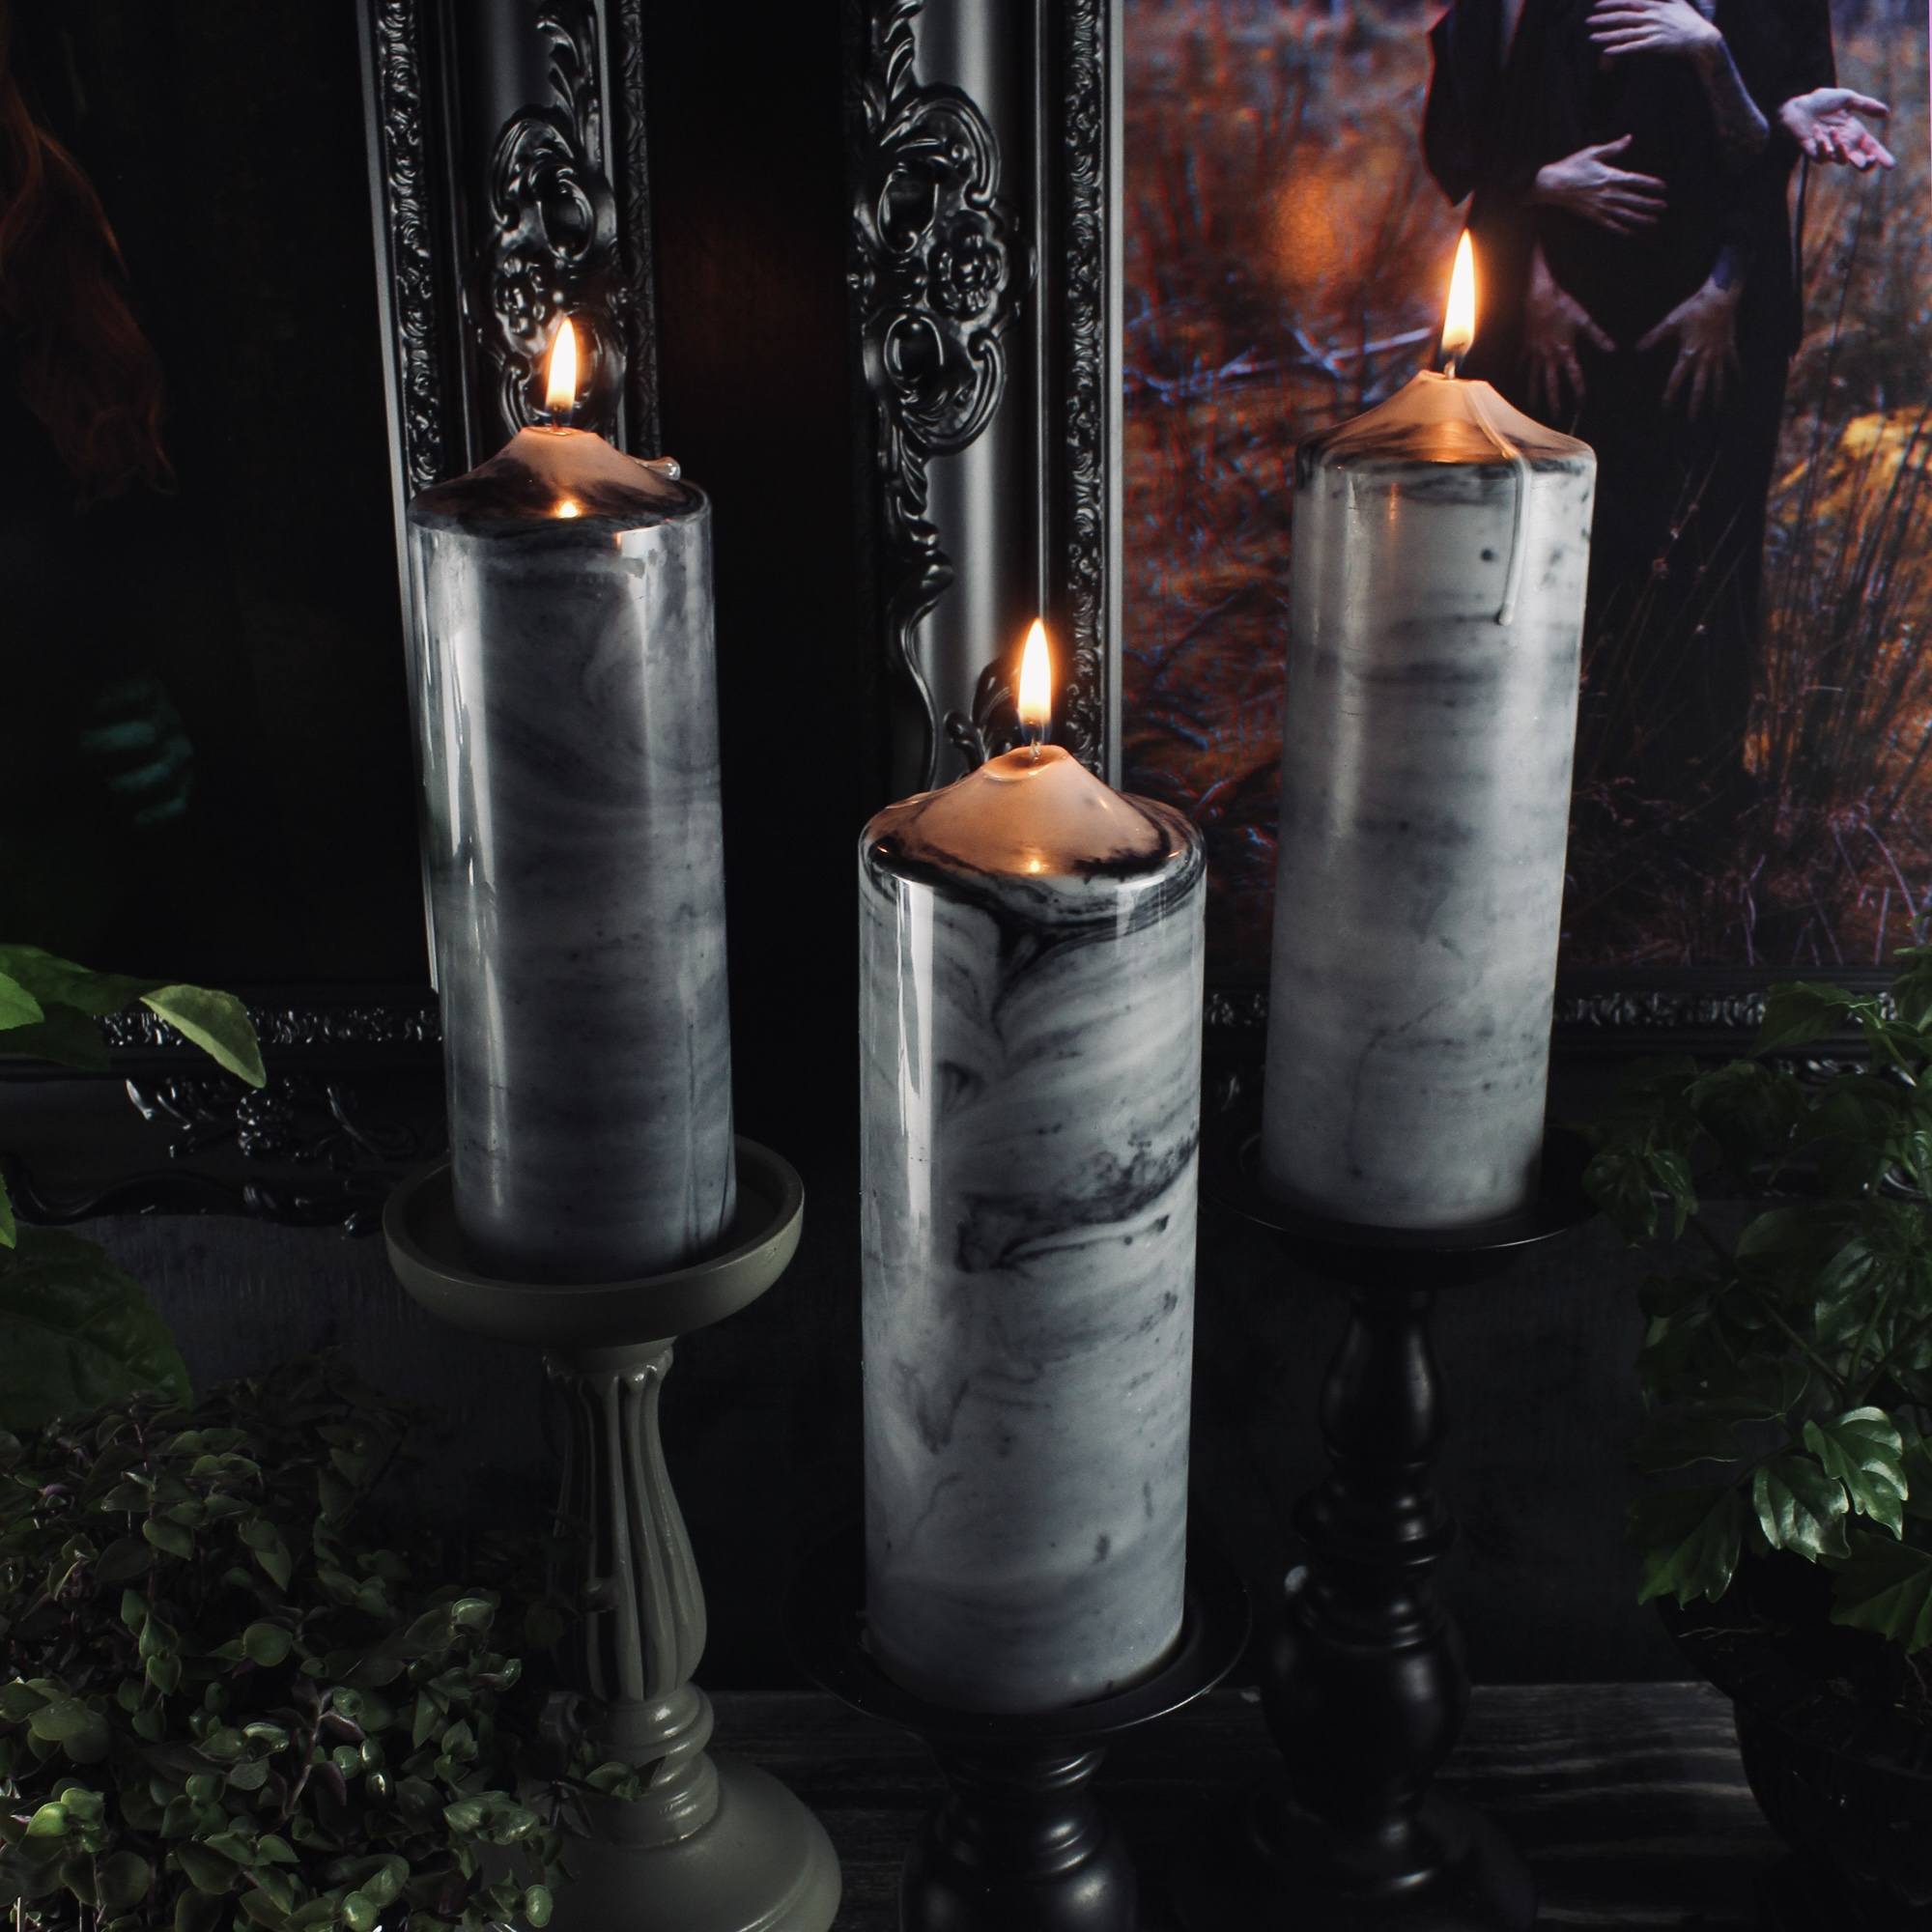 gothic pillar candle the blackened teeth